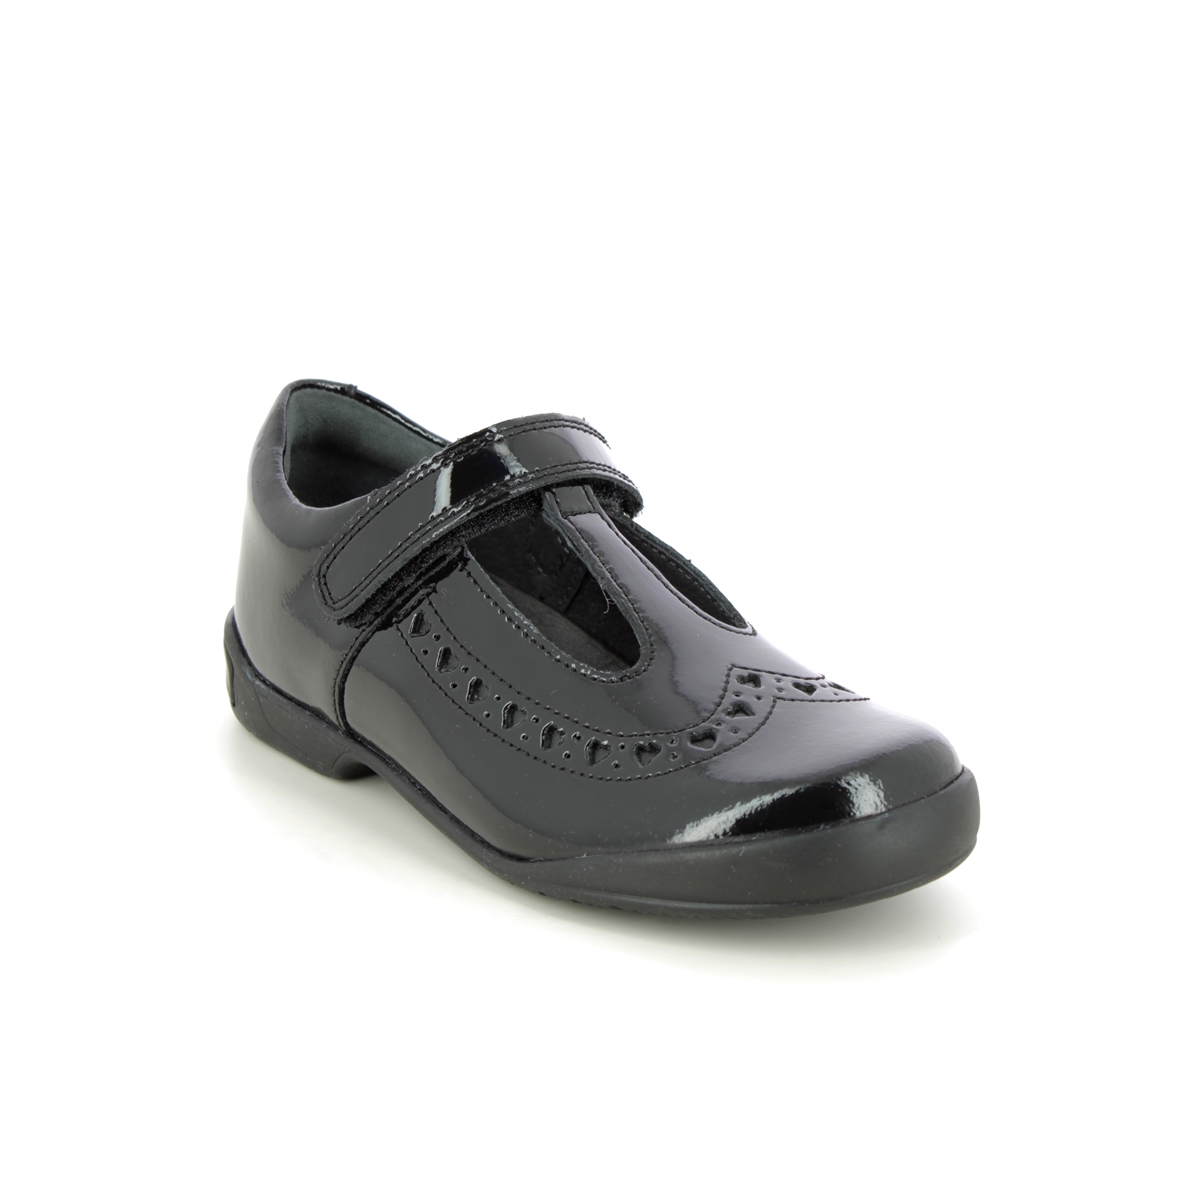 Start Rite - Leapfrog In Black Patent 2789-36F In Size 11.5 In Plain Black Patent For School Girls Shoes  In Black Patent For kids